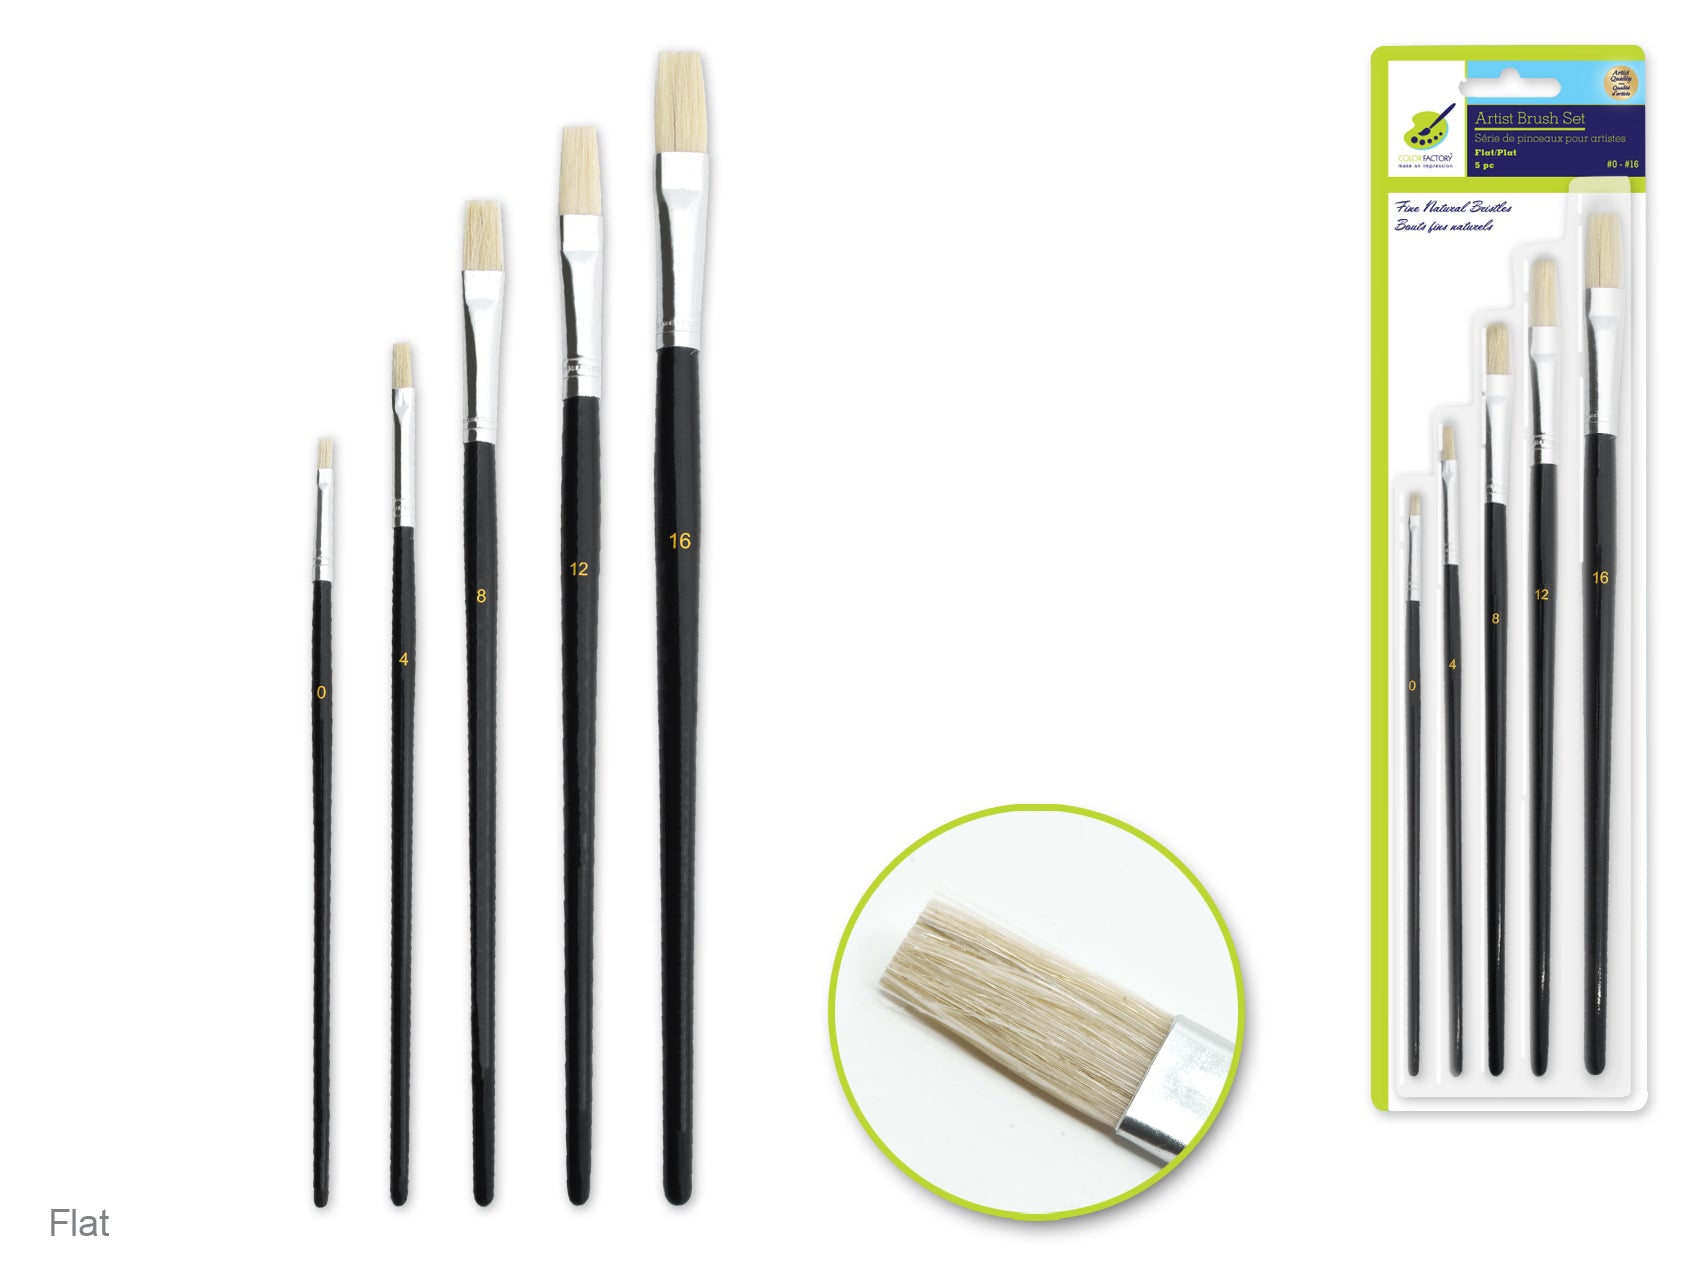 Artist Brush Set: Fine Bristle #0-#16, Featuring Five Wood Handles in Flat Style